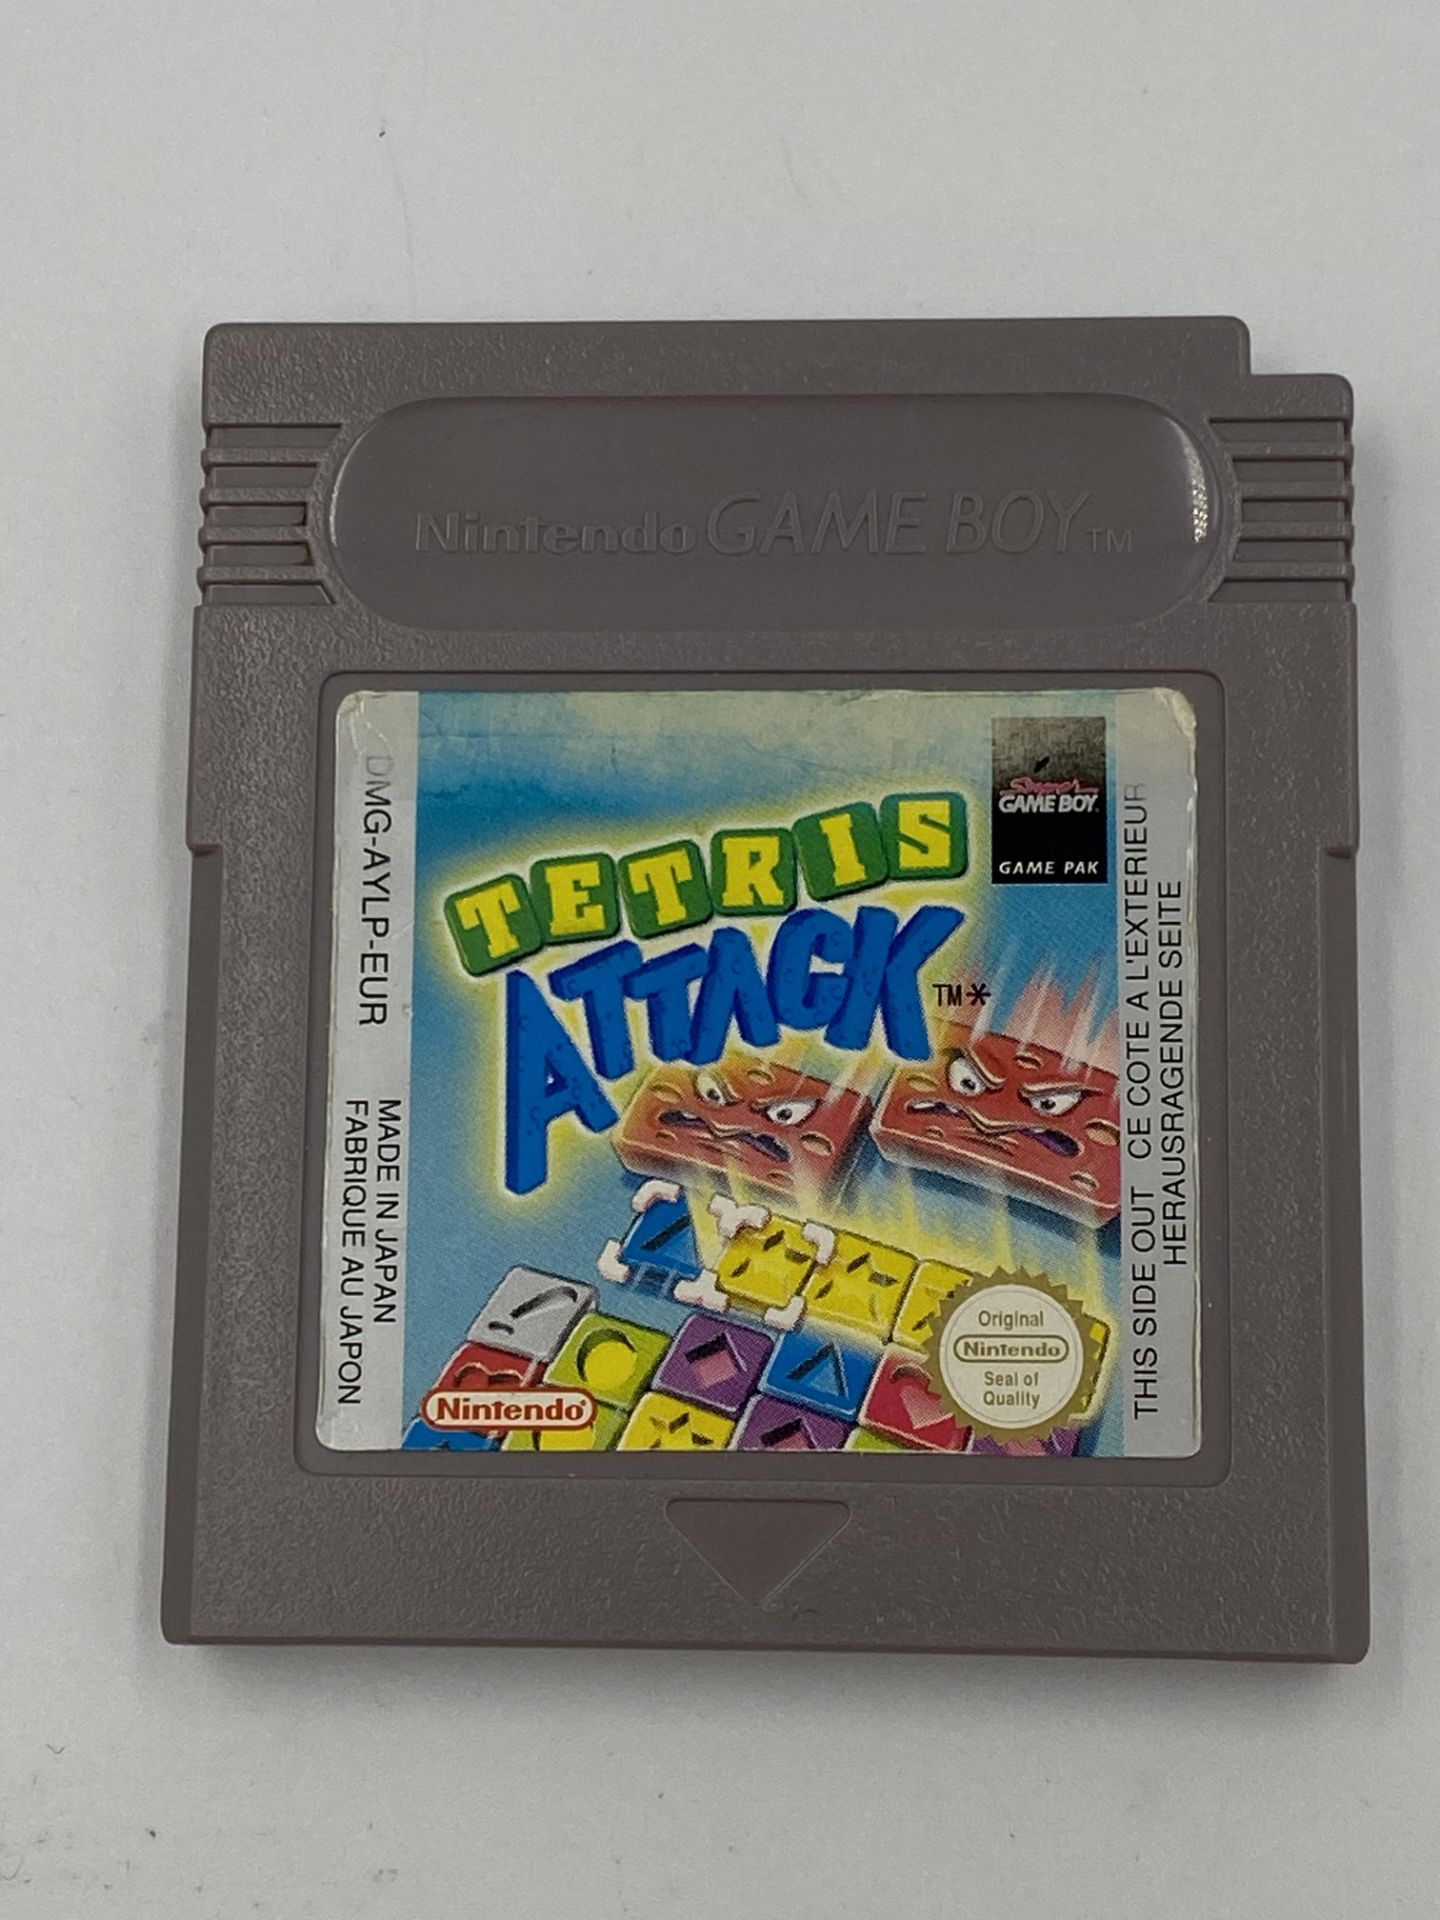 Nintendo Gameboy Tetris Attack - Image 2 of 2